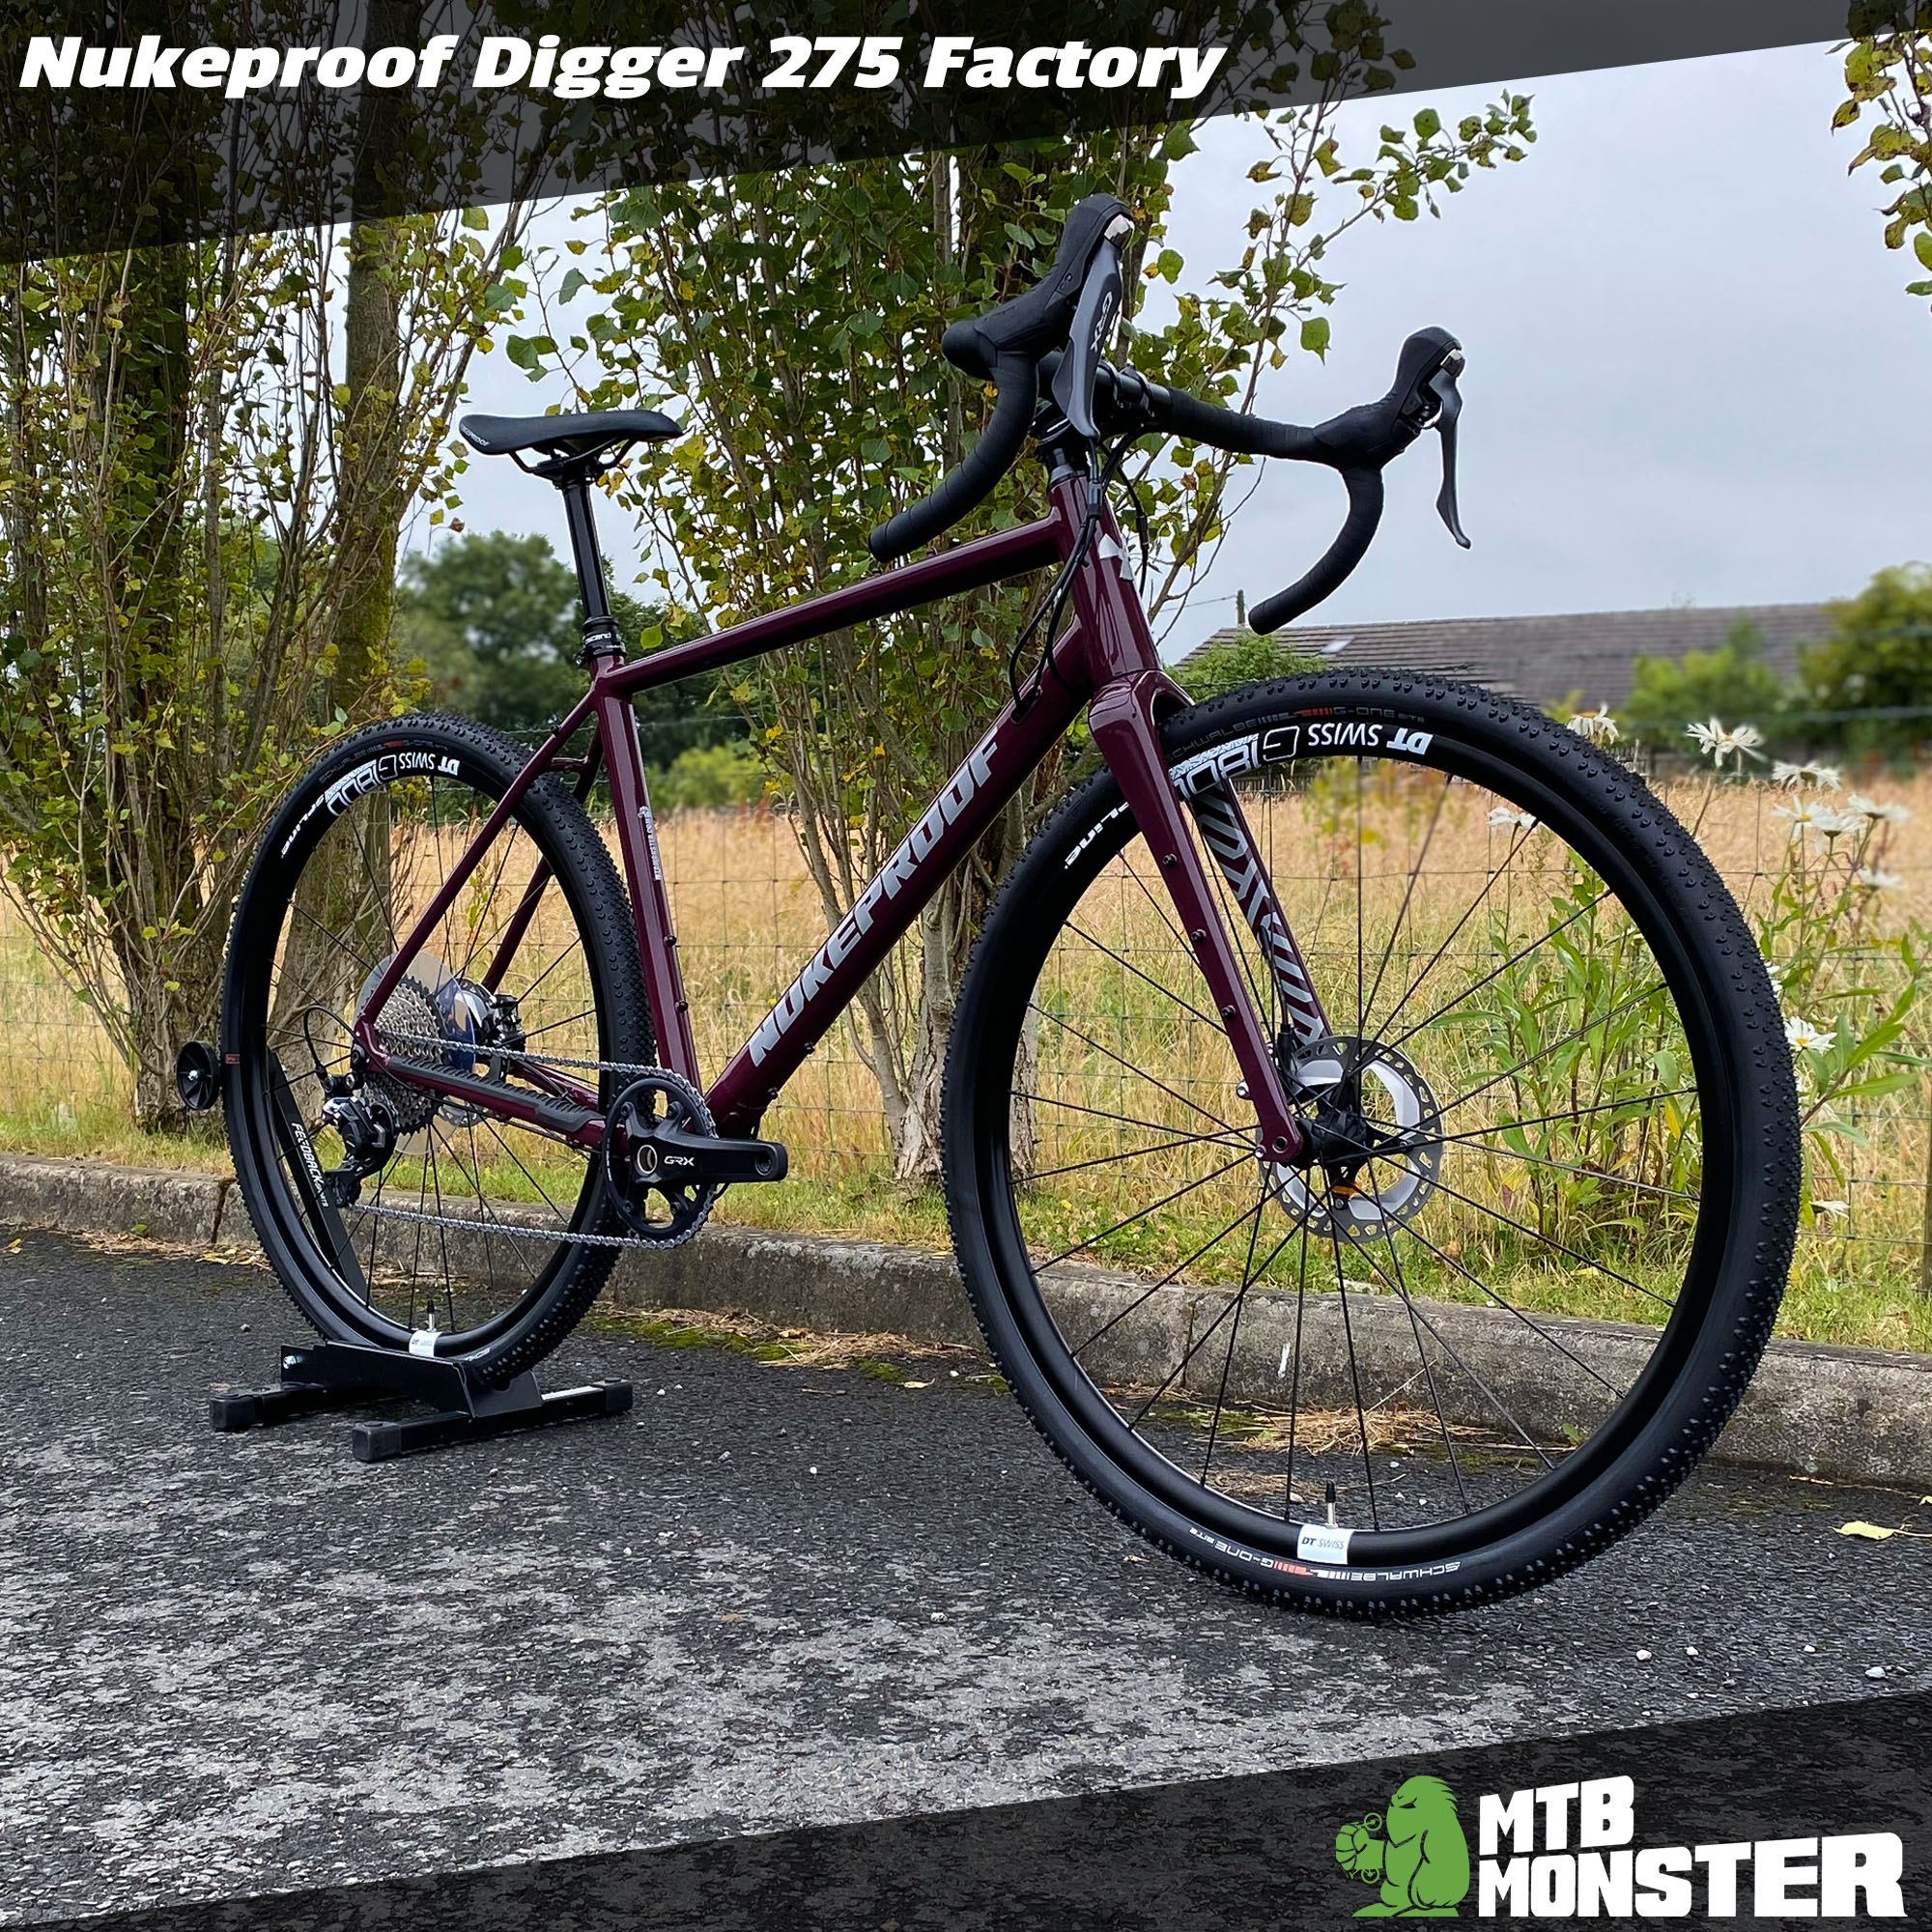 Nukeproof Digger 275 Factory